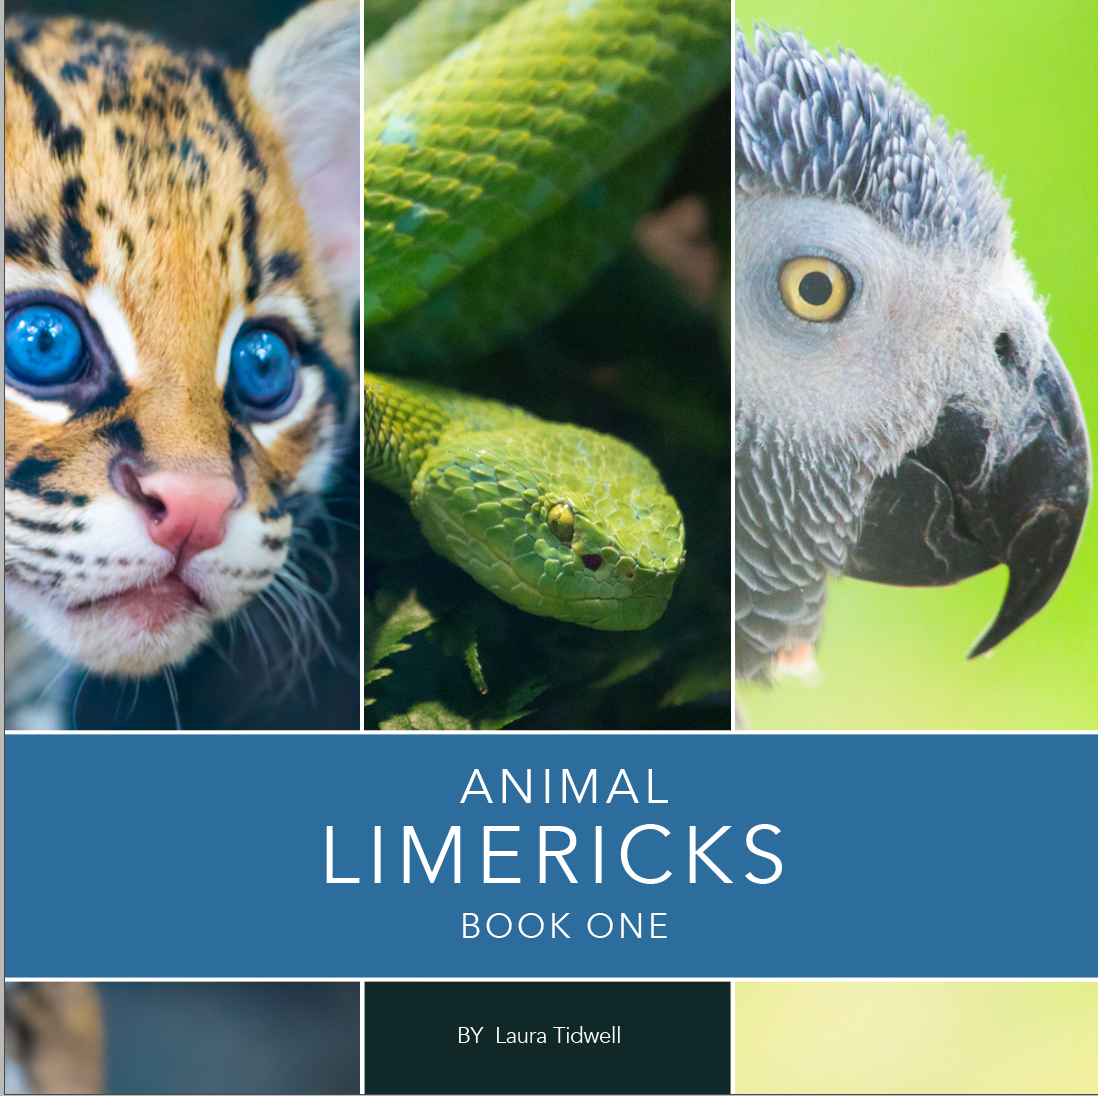 Animal Limericks Book One - By Laura Tidwell